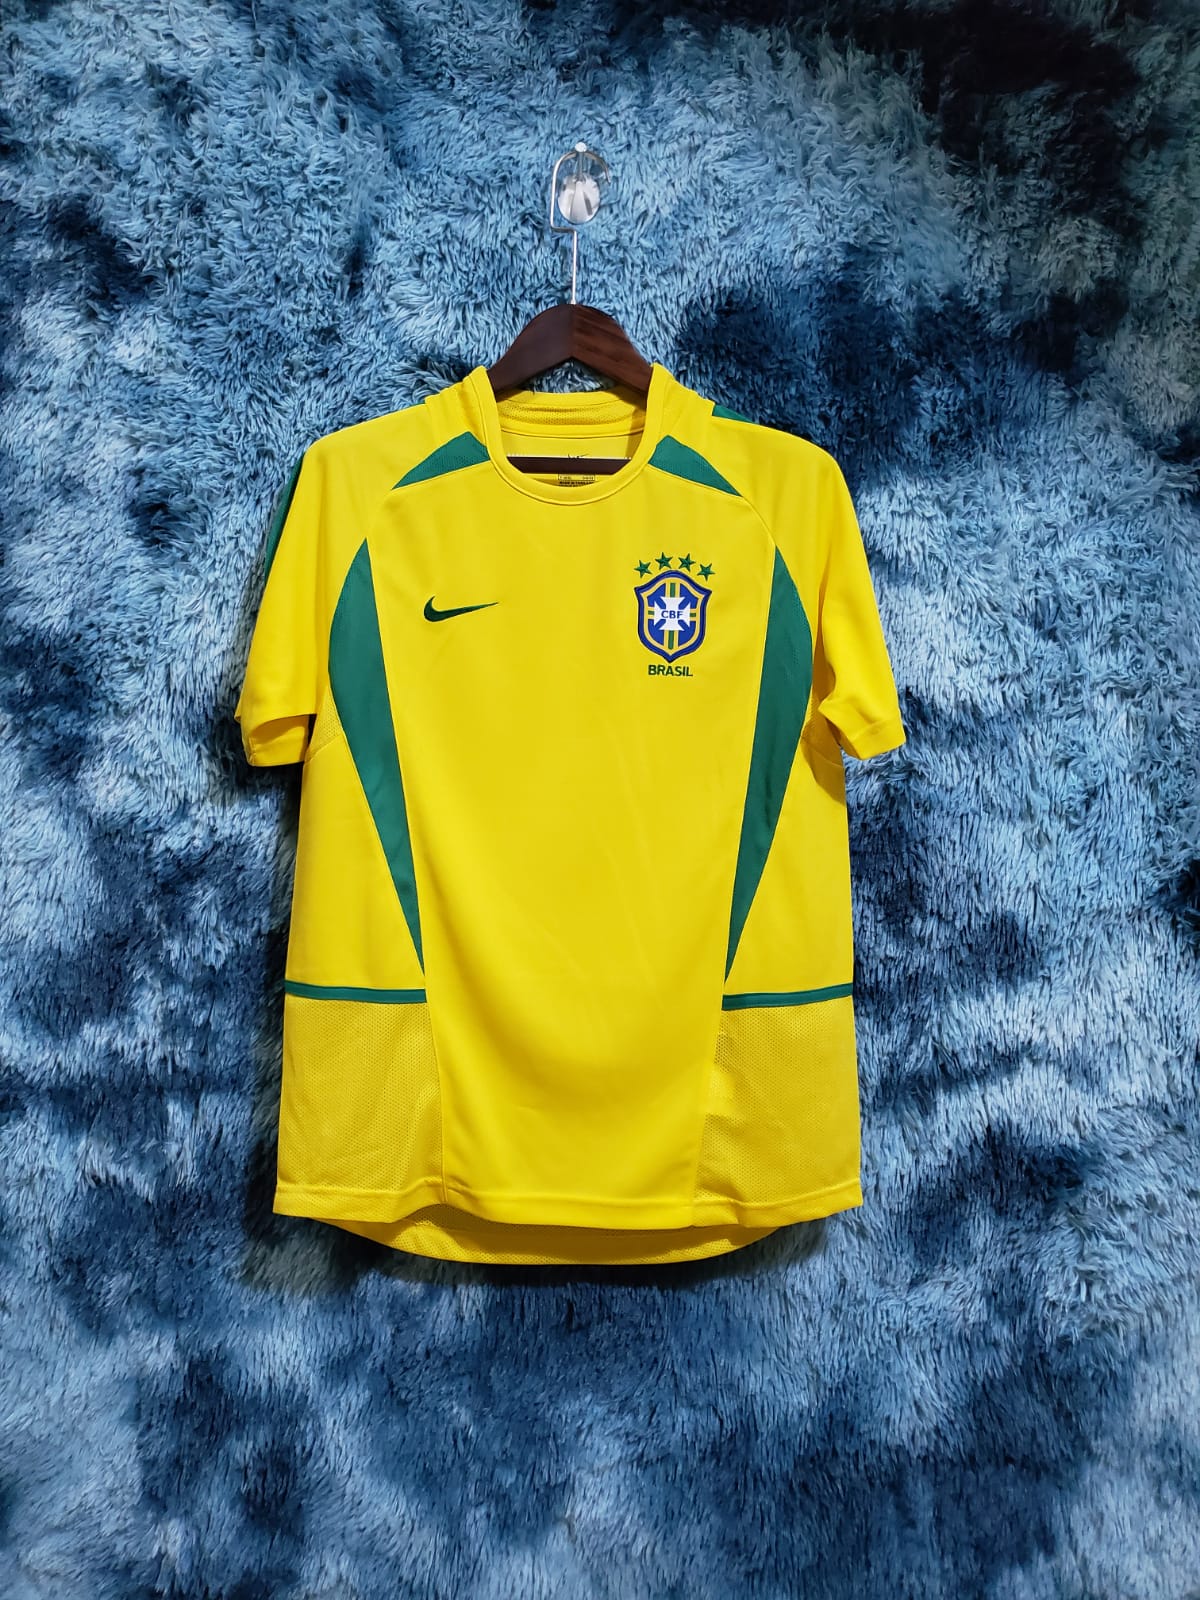 Retro Brazil 2002 World Cup Home Kit